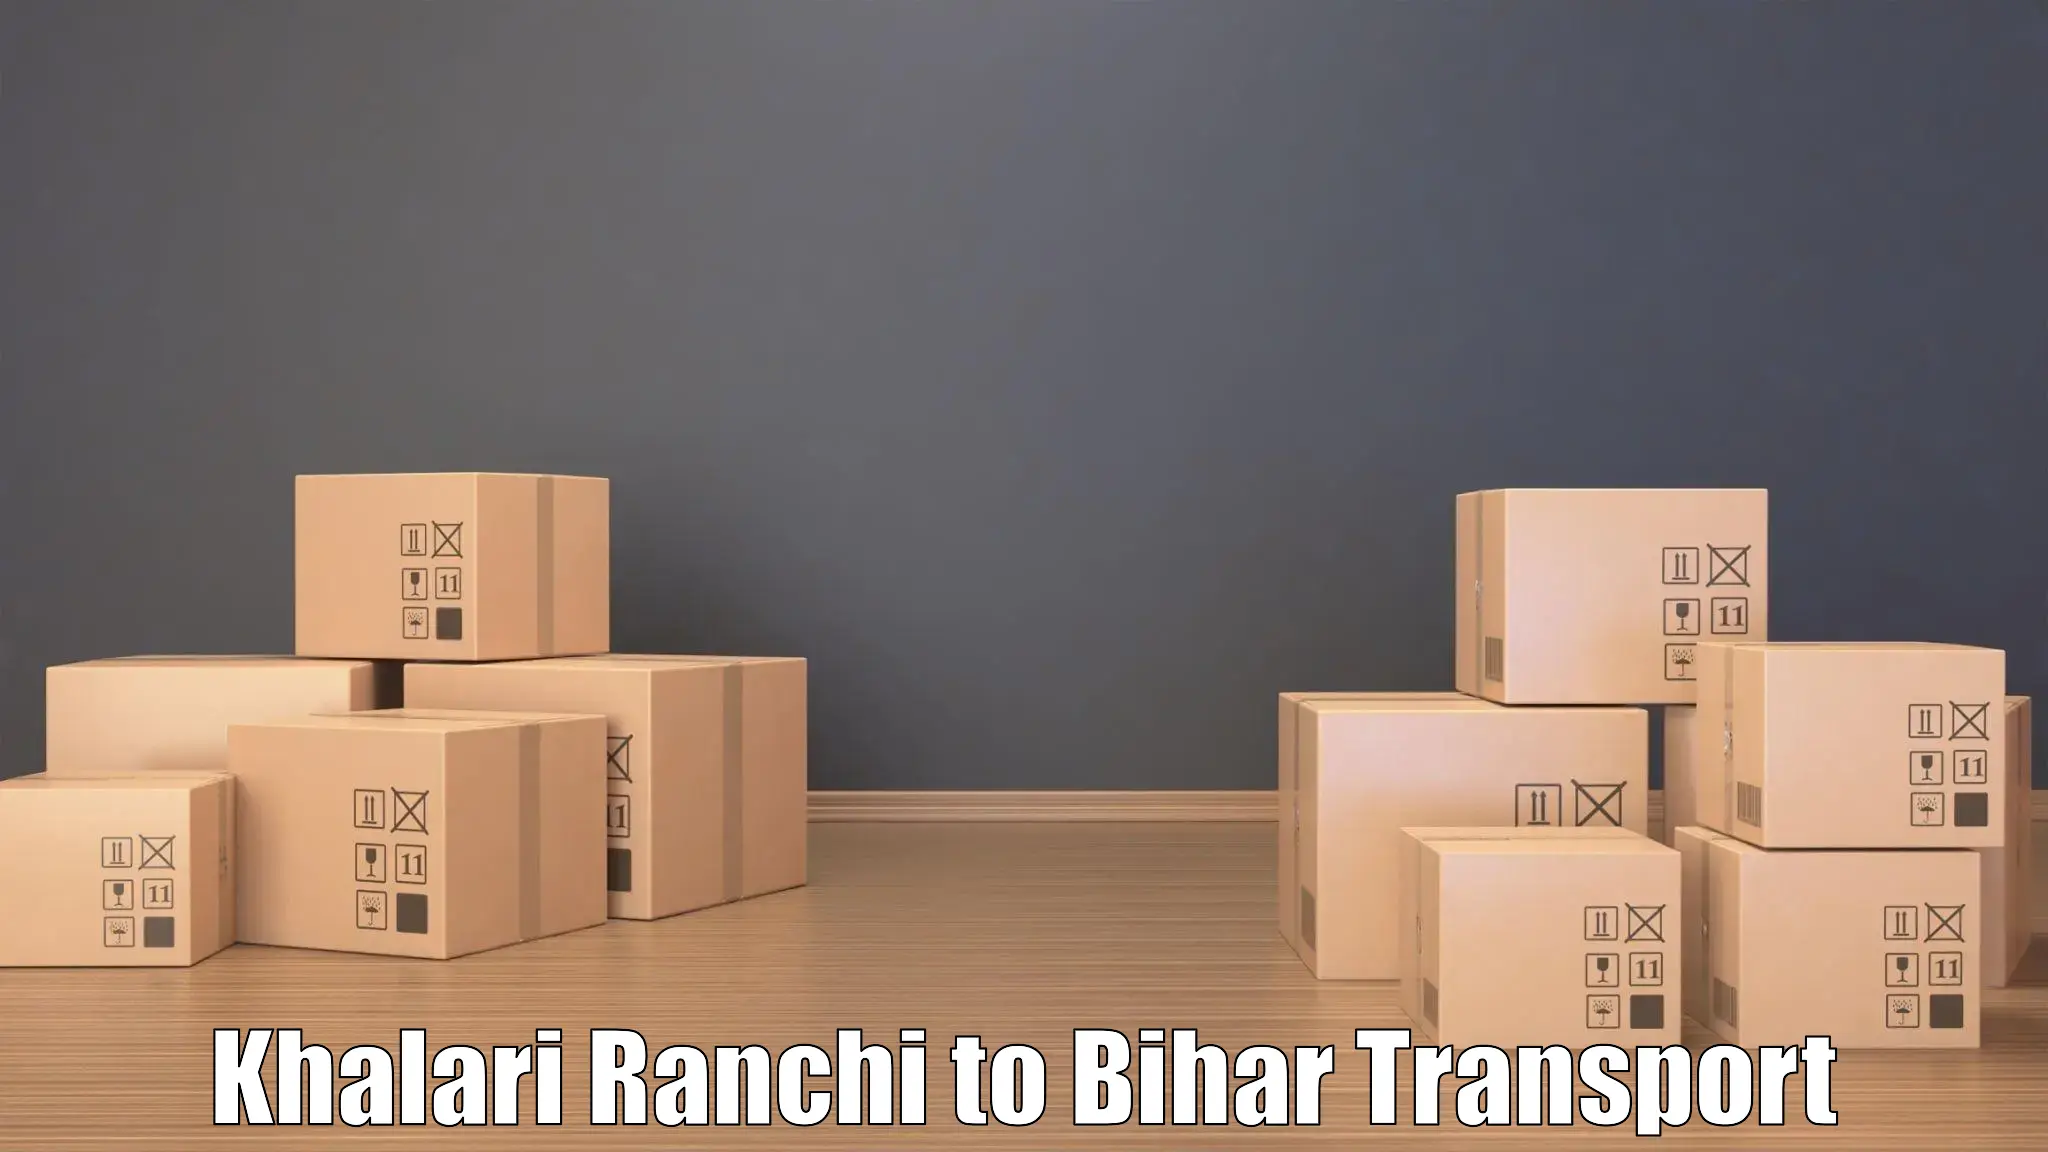 Express transport services Khalari Ranchi to Bihar